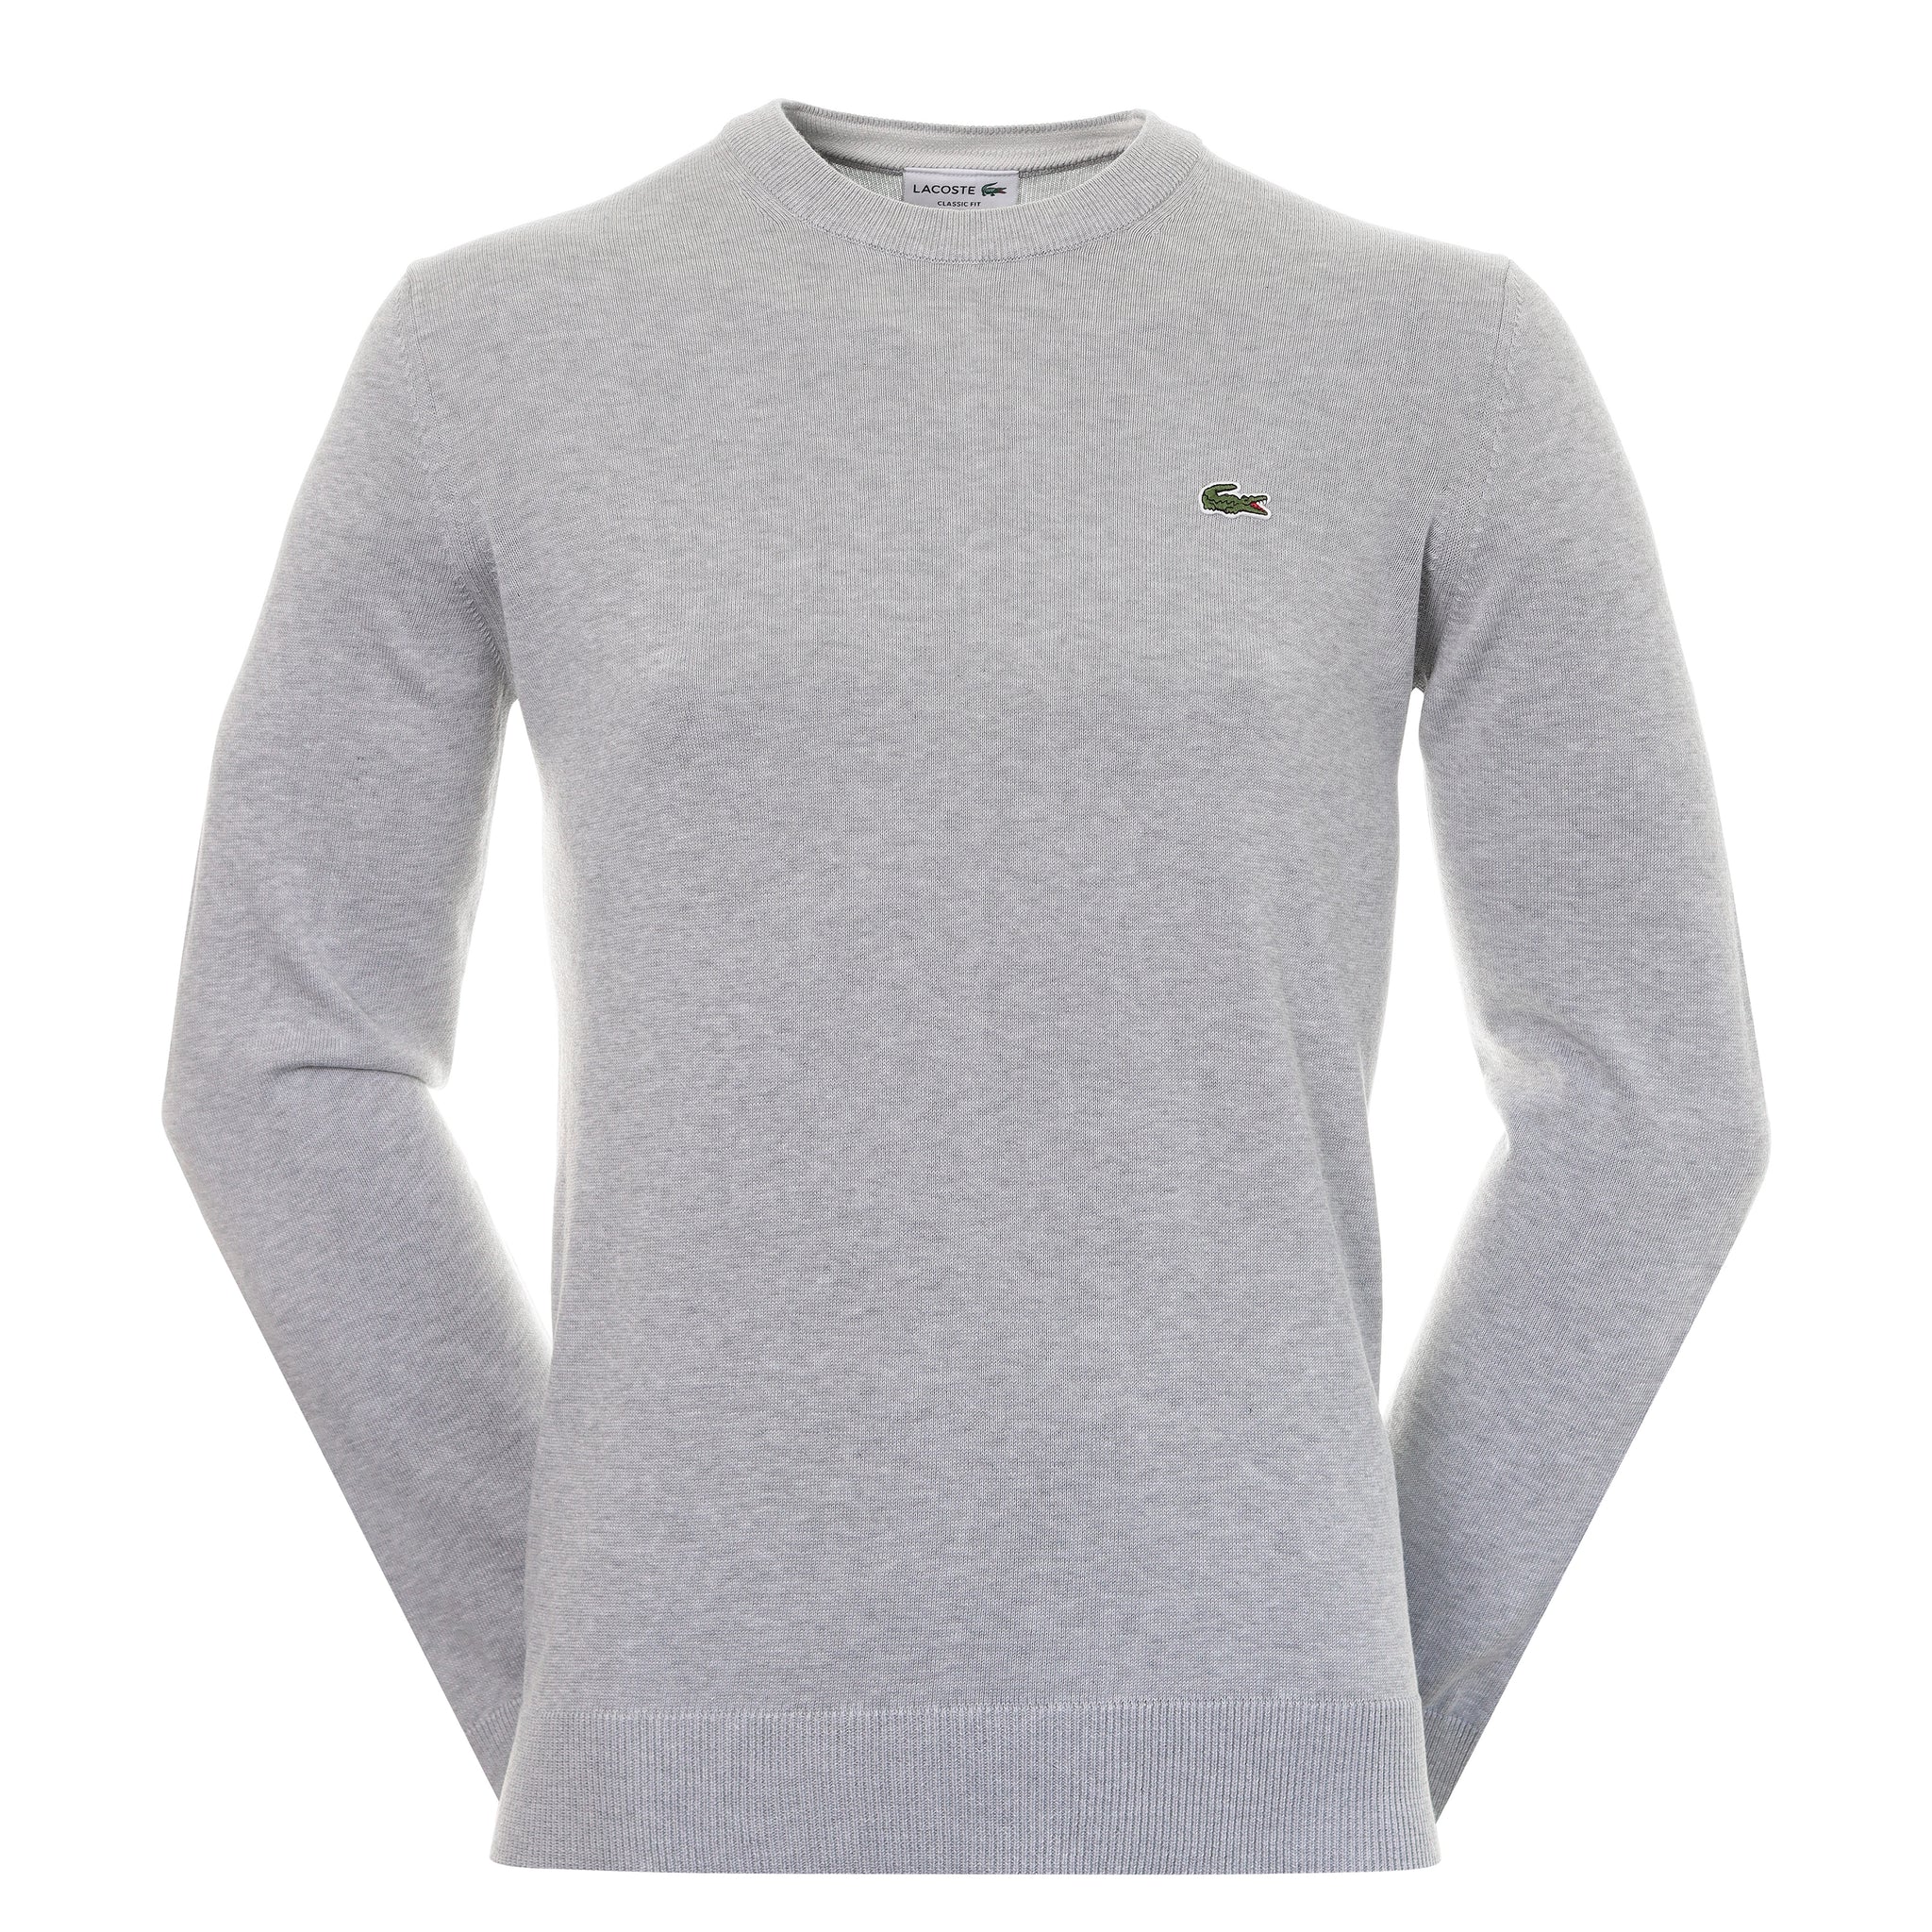 lacoste-organic-cotton-crew-sweater-ah1985-grey-chine-cca